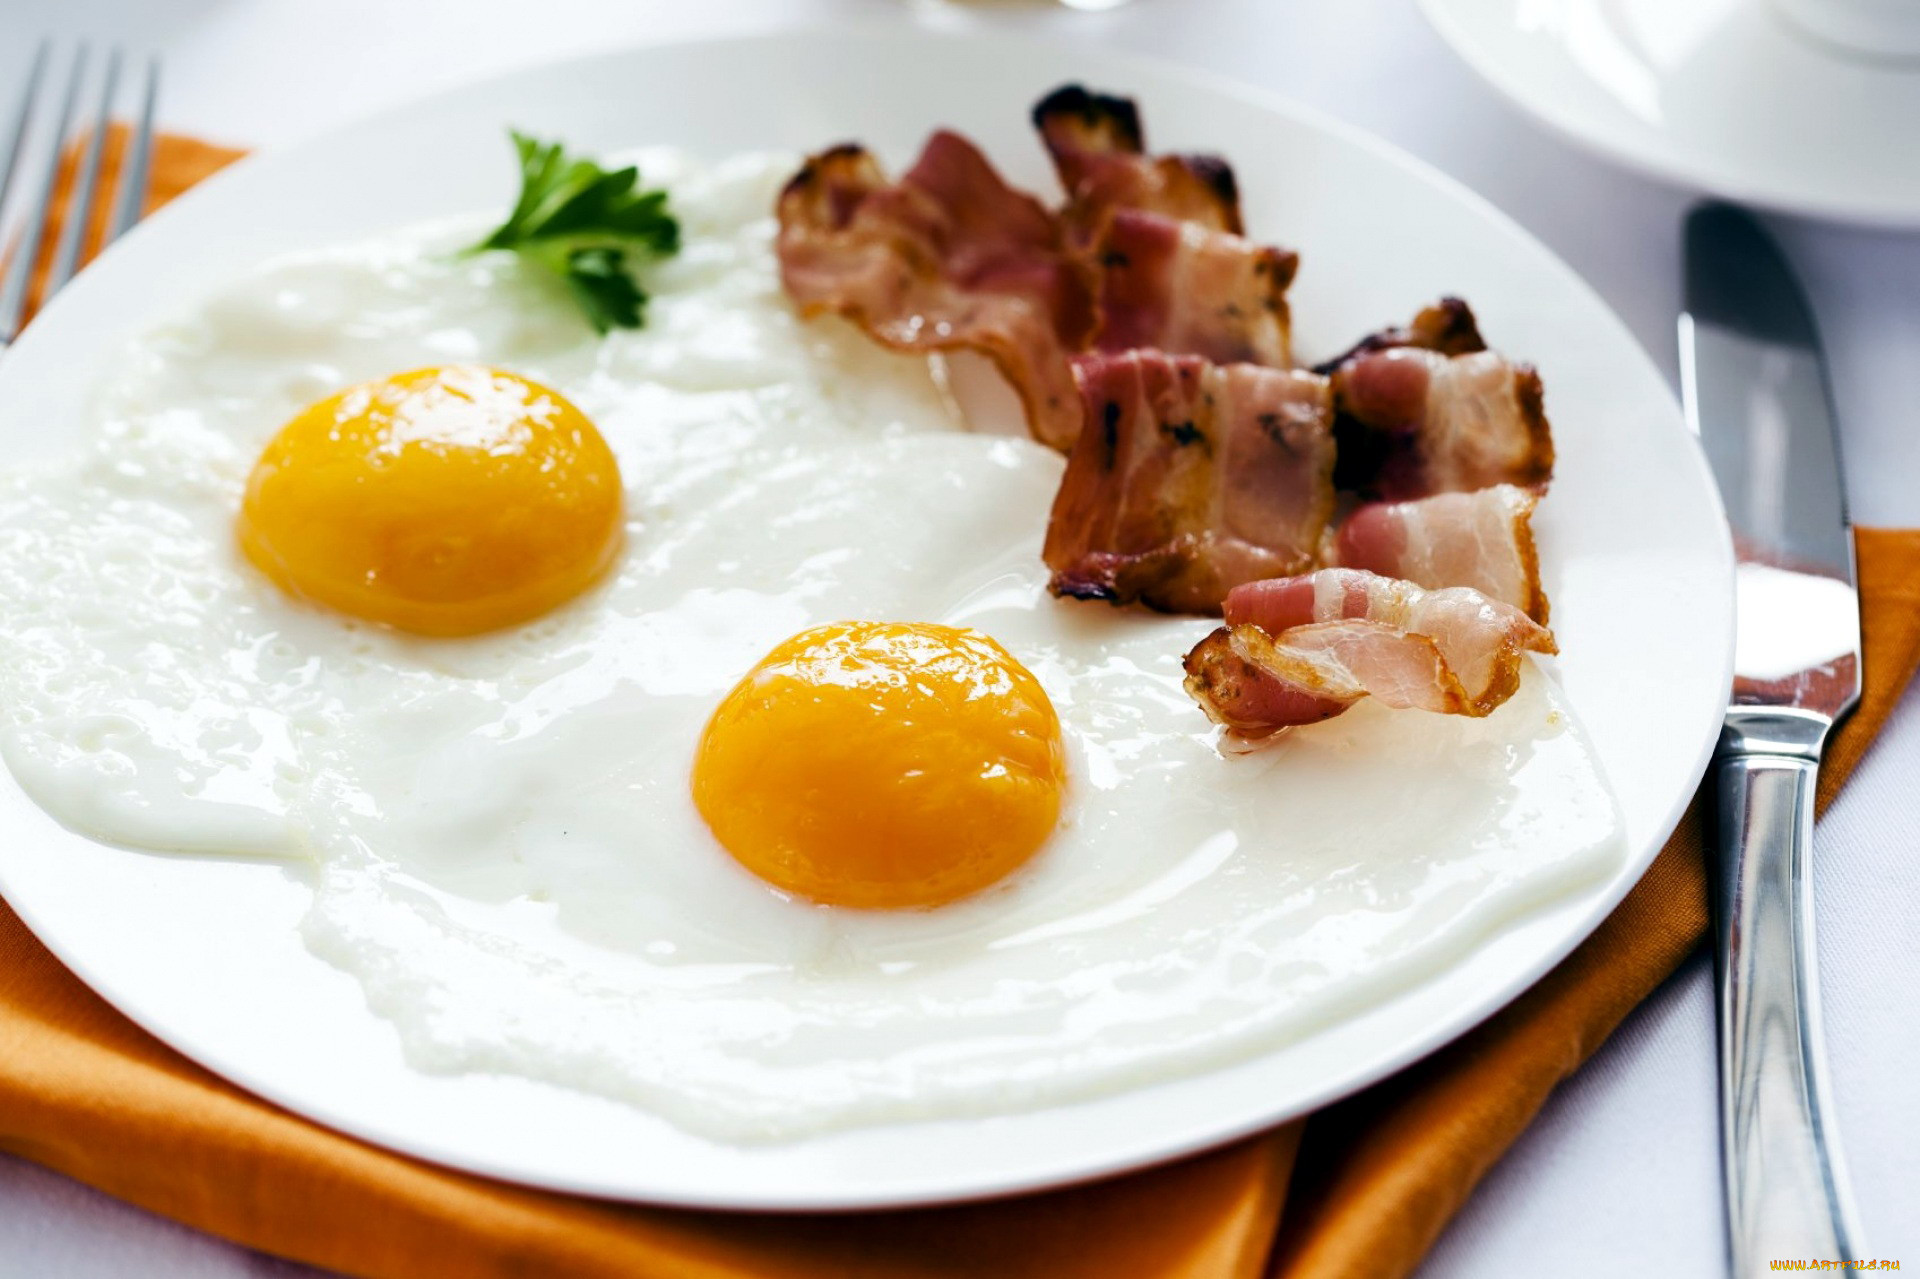 Яйца с беконом на сковороде рецепт с фото